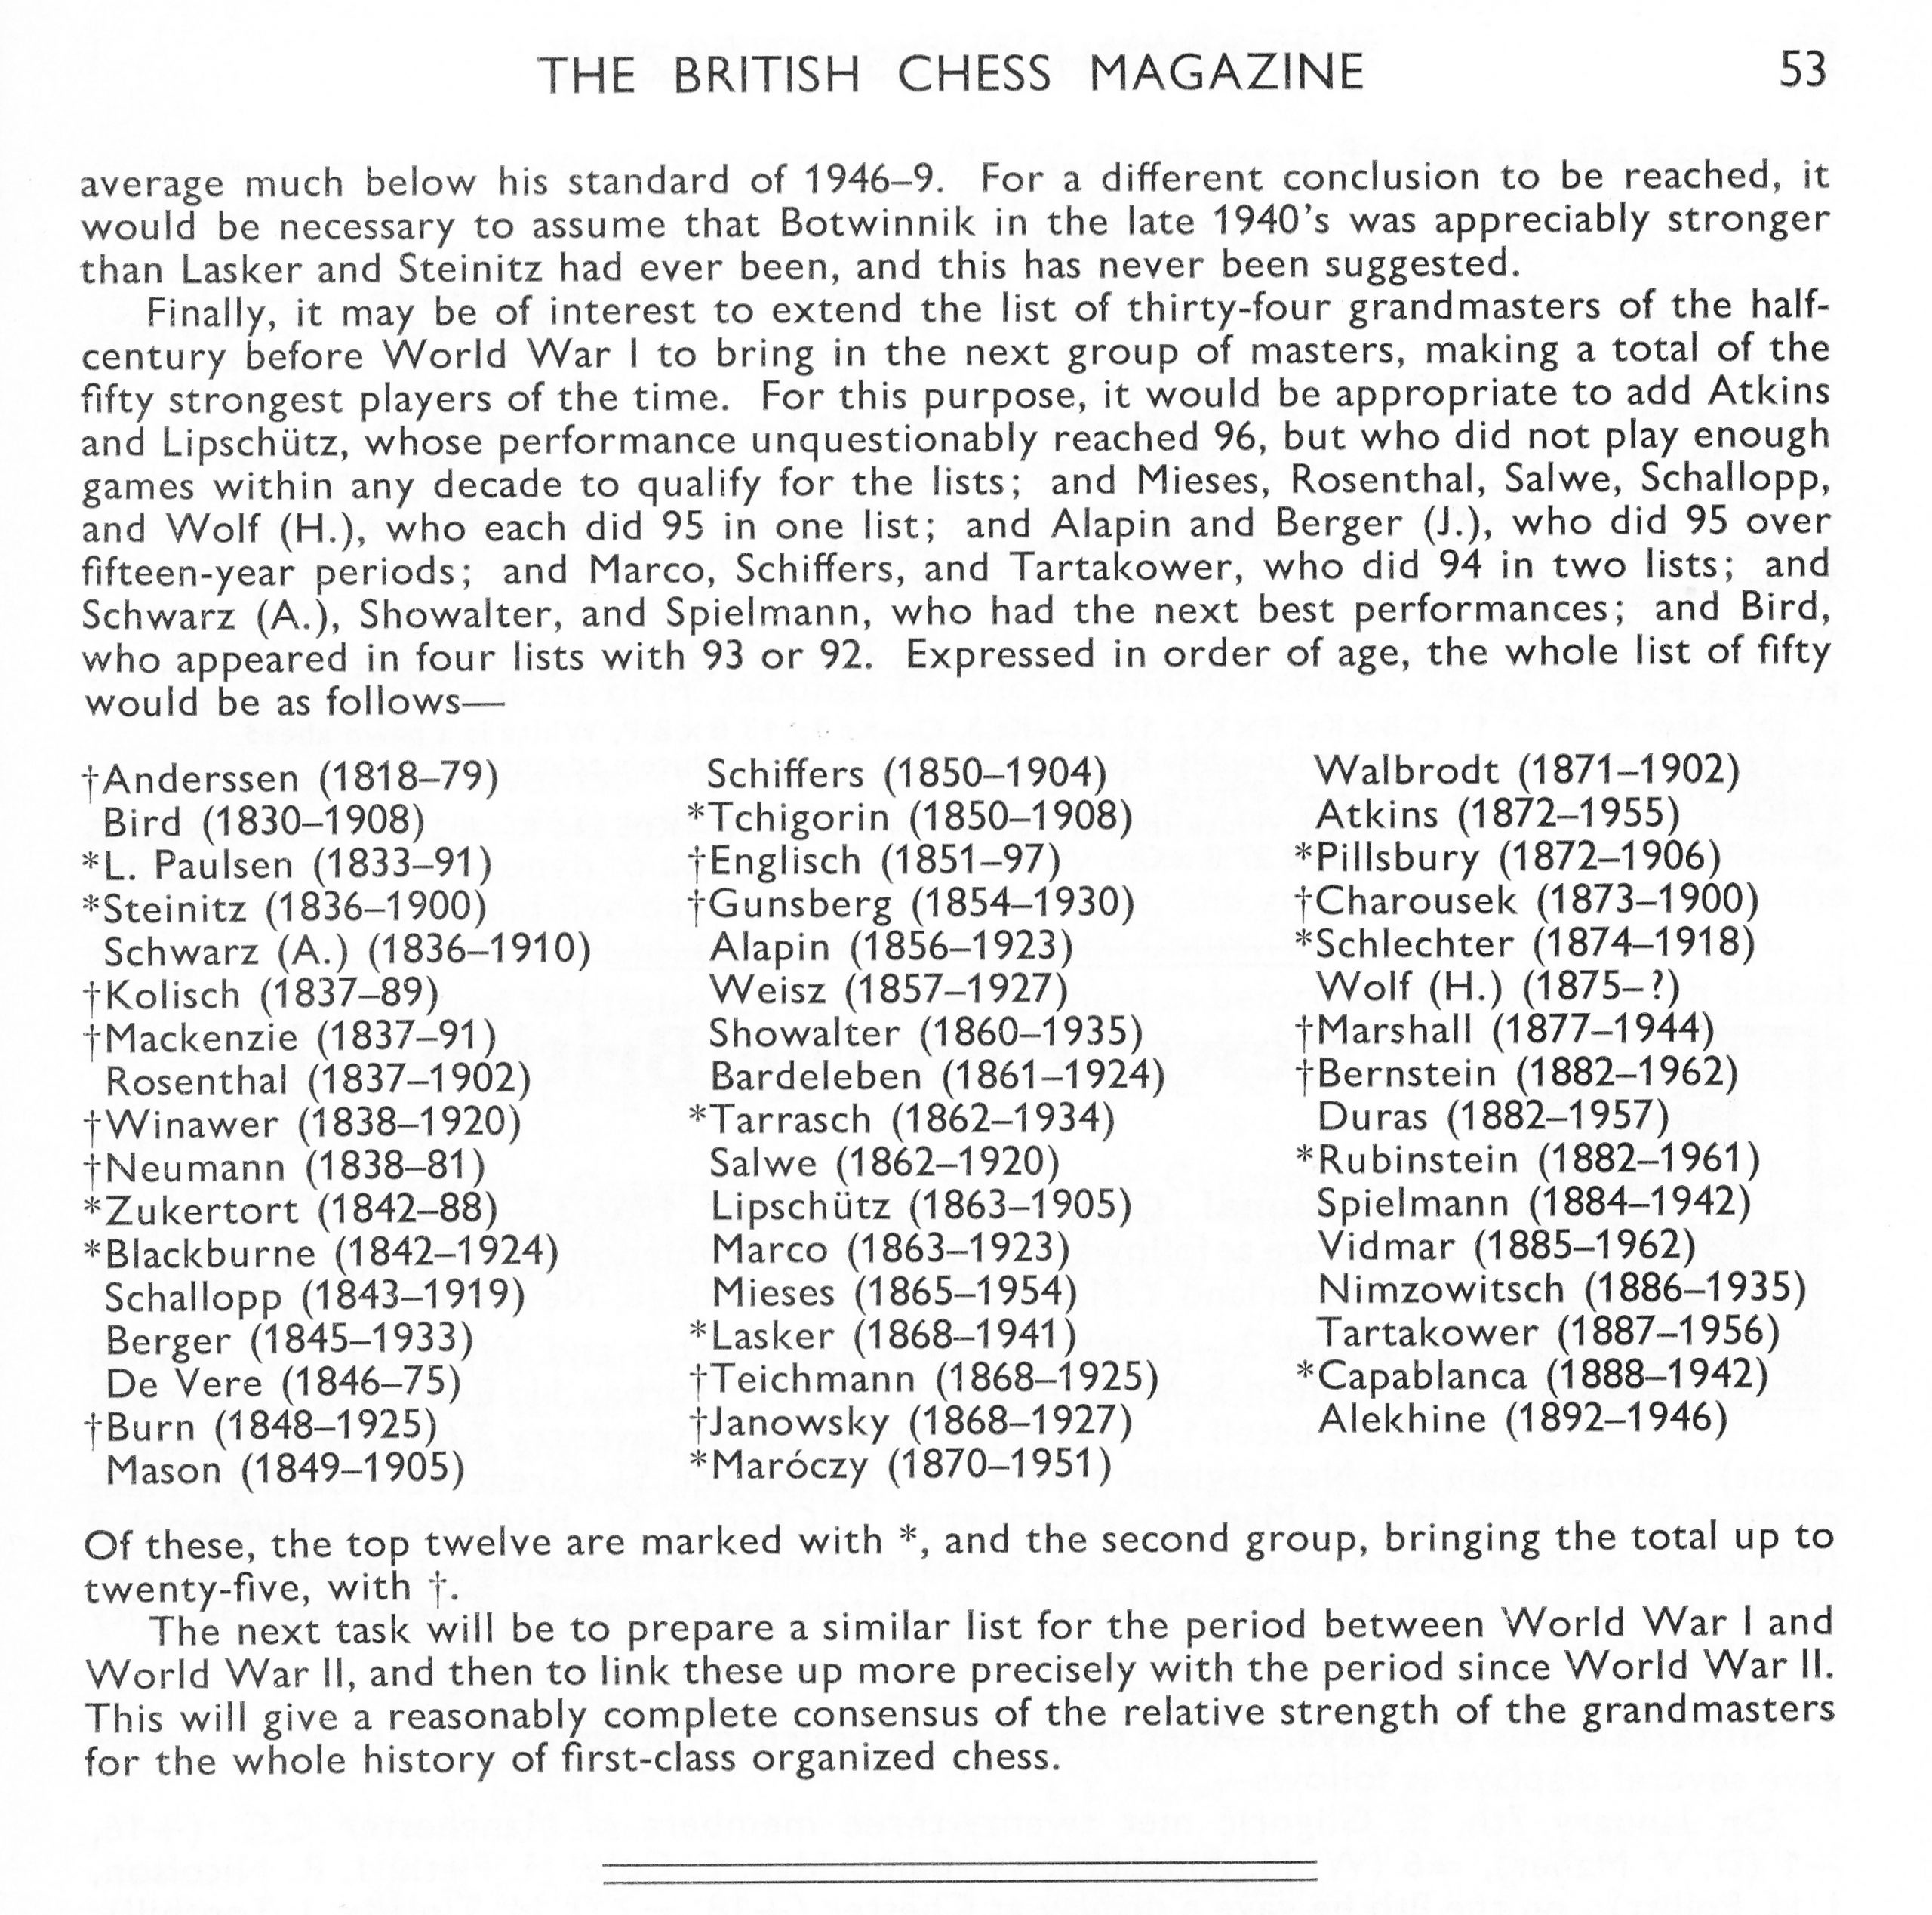 British Chess Magazine, Volume LXXXIII, Number 2, February, 1963, page 53